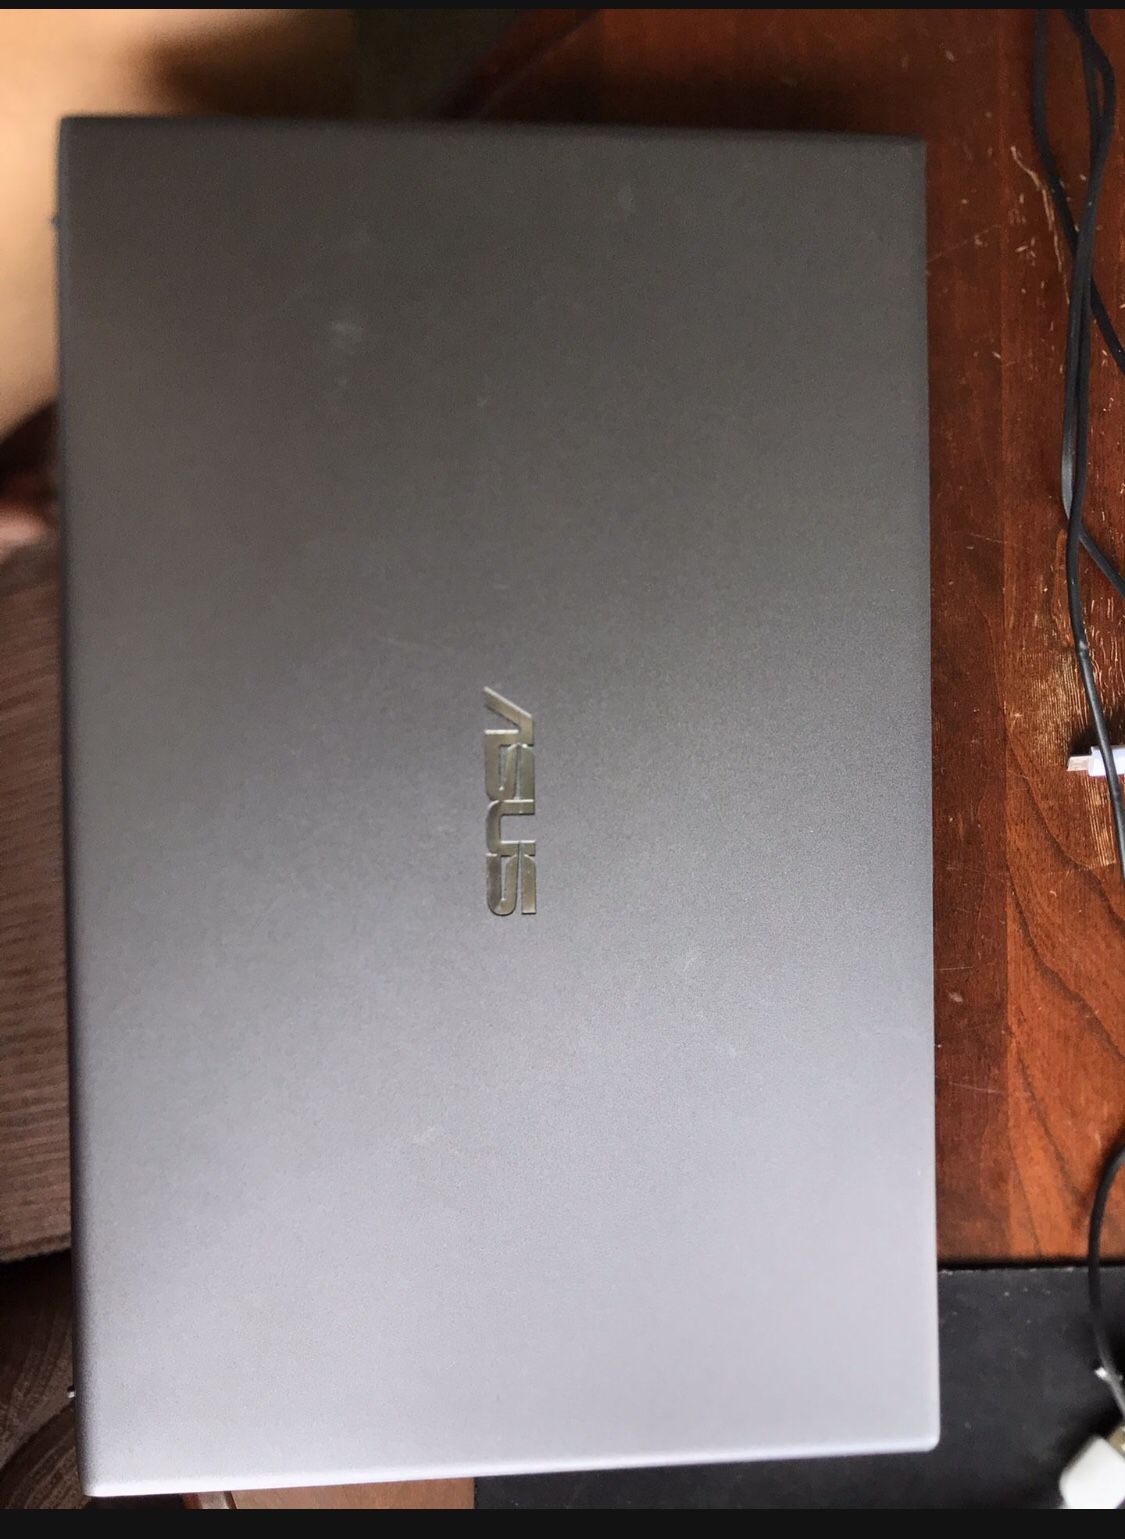 Asus Vivobook Laptop 